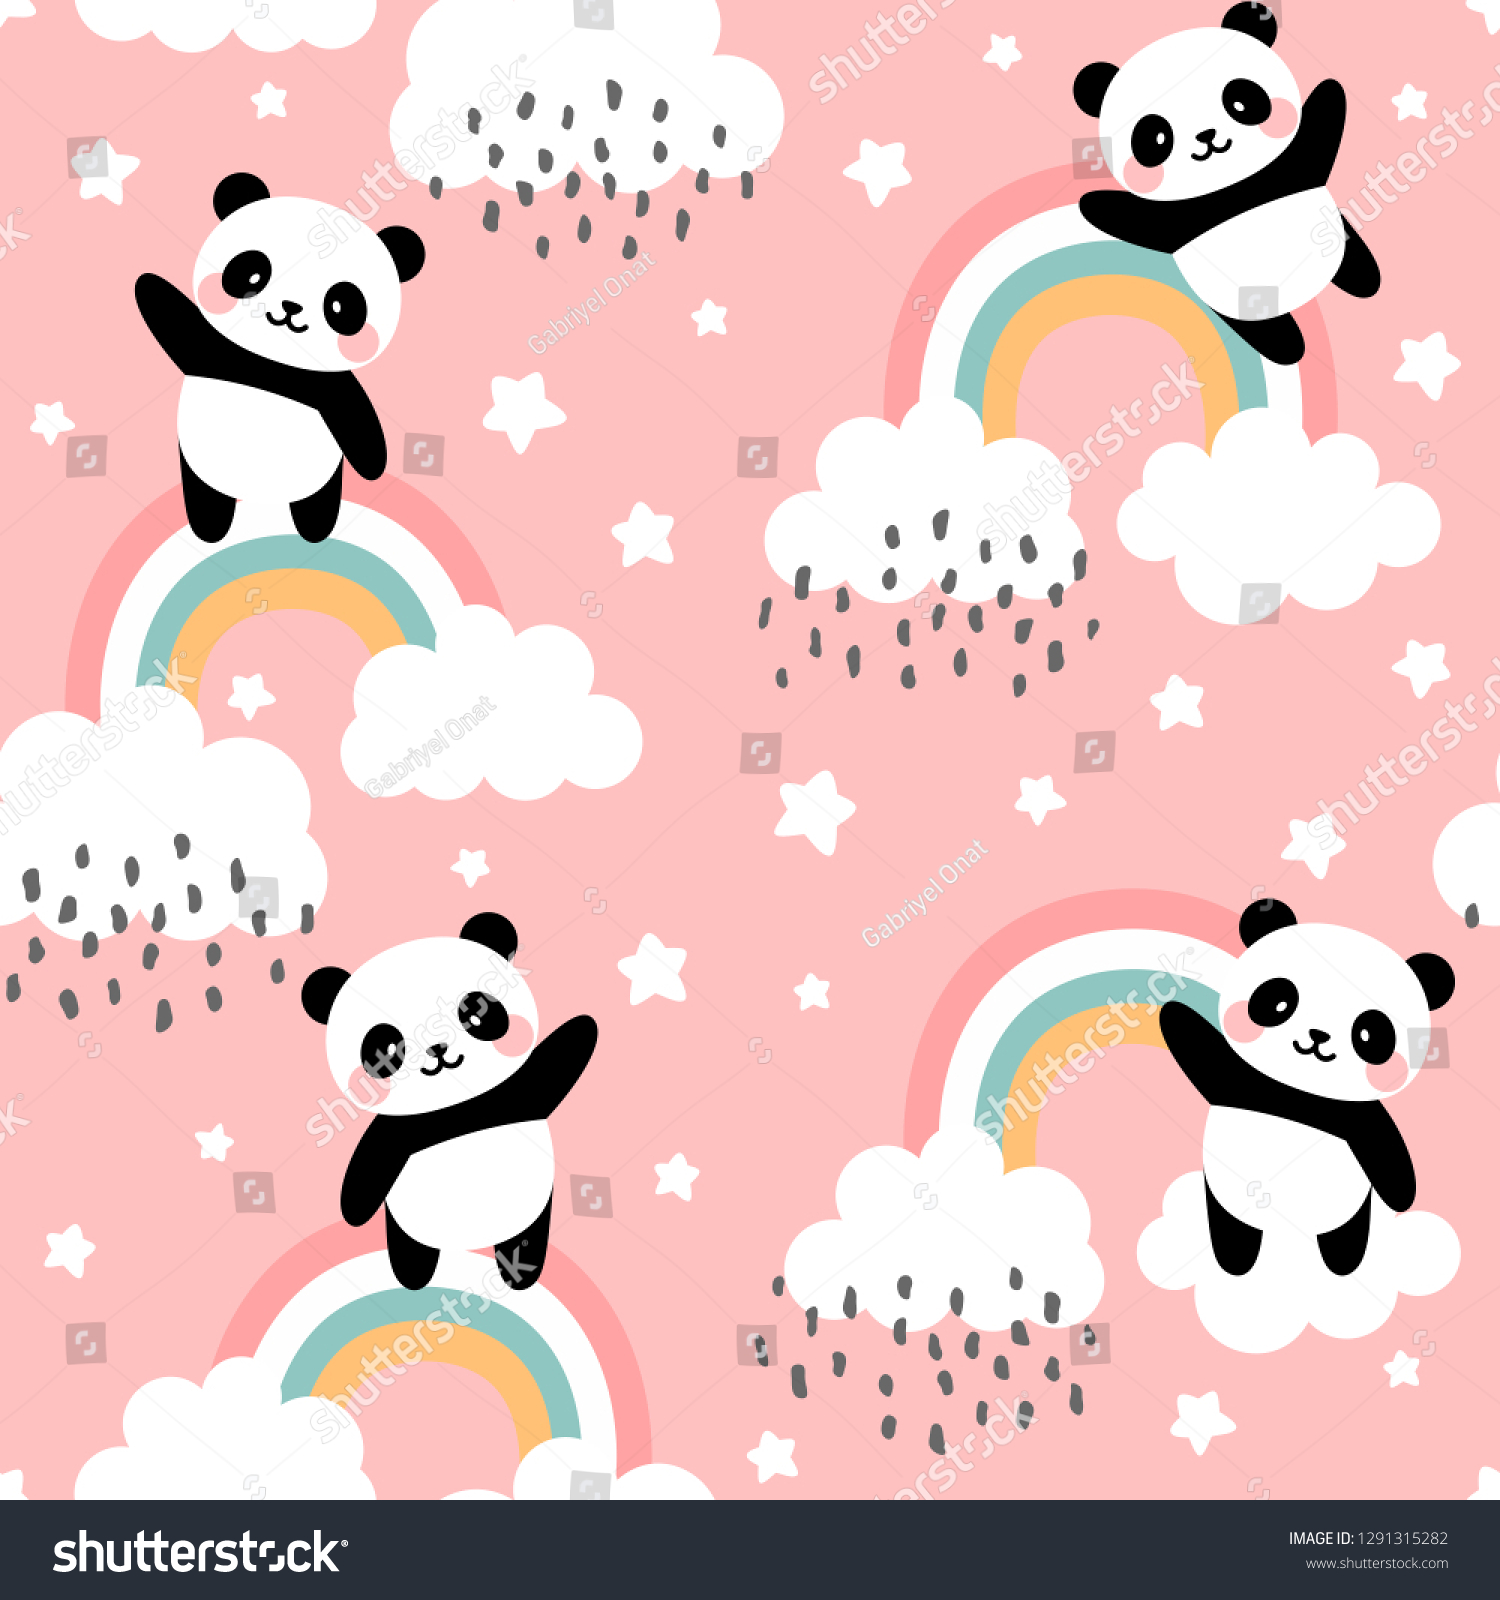 Cute panda background images stock photos vectors